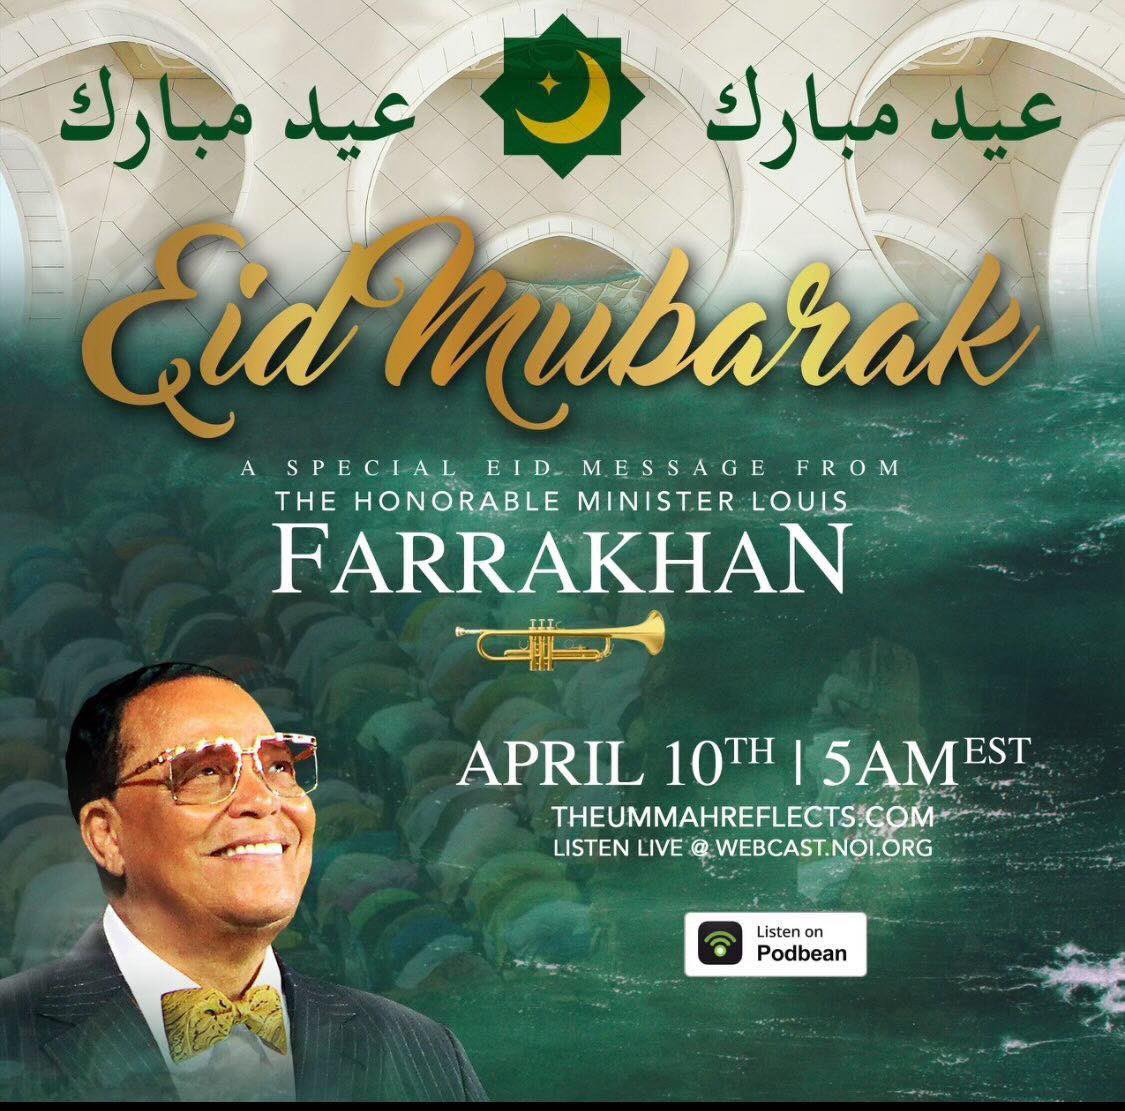 On Wednesday, April 10th, The Honorable Minister @LouisFarrakhan will deliver a special Eid message on The Ummah Reflects. Listen Live at 5AM EST: TheUmmahReflects.com Webcast.NOI.org #Farrakhan #Ramadan #EidMubarak